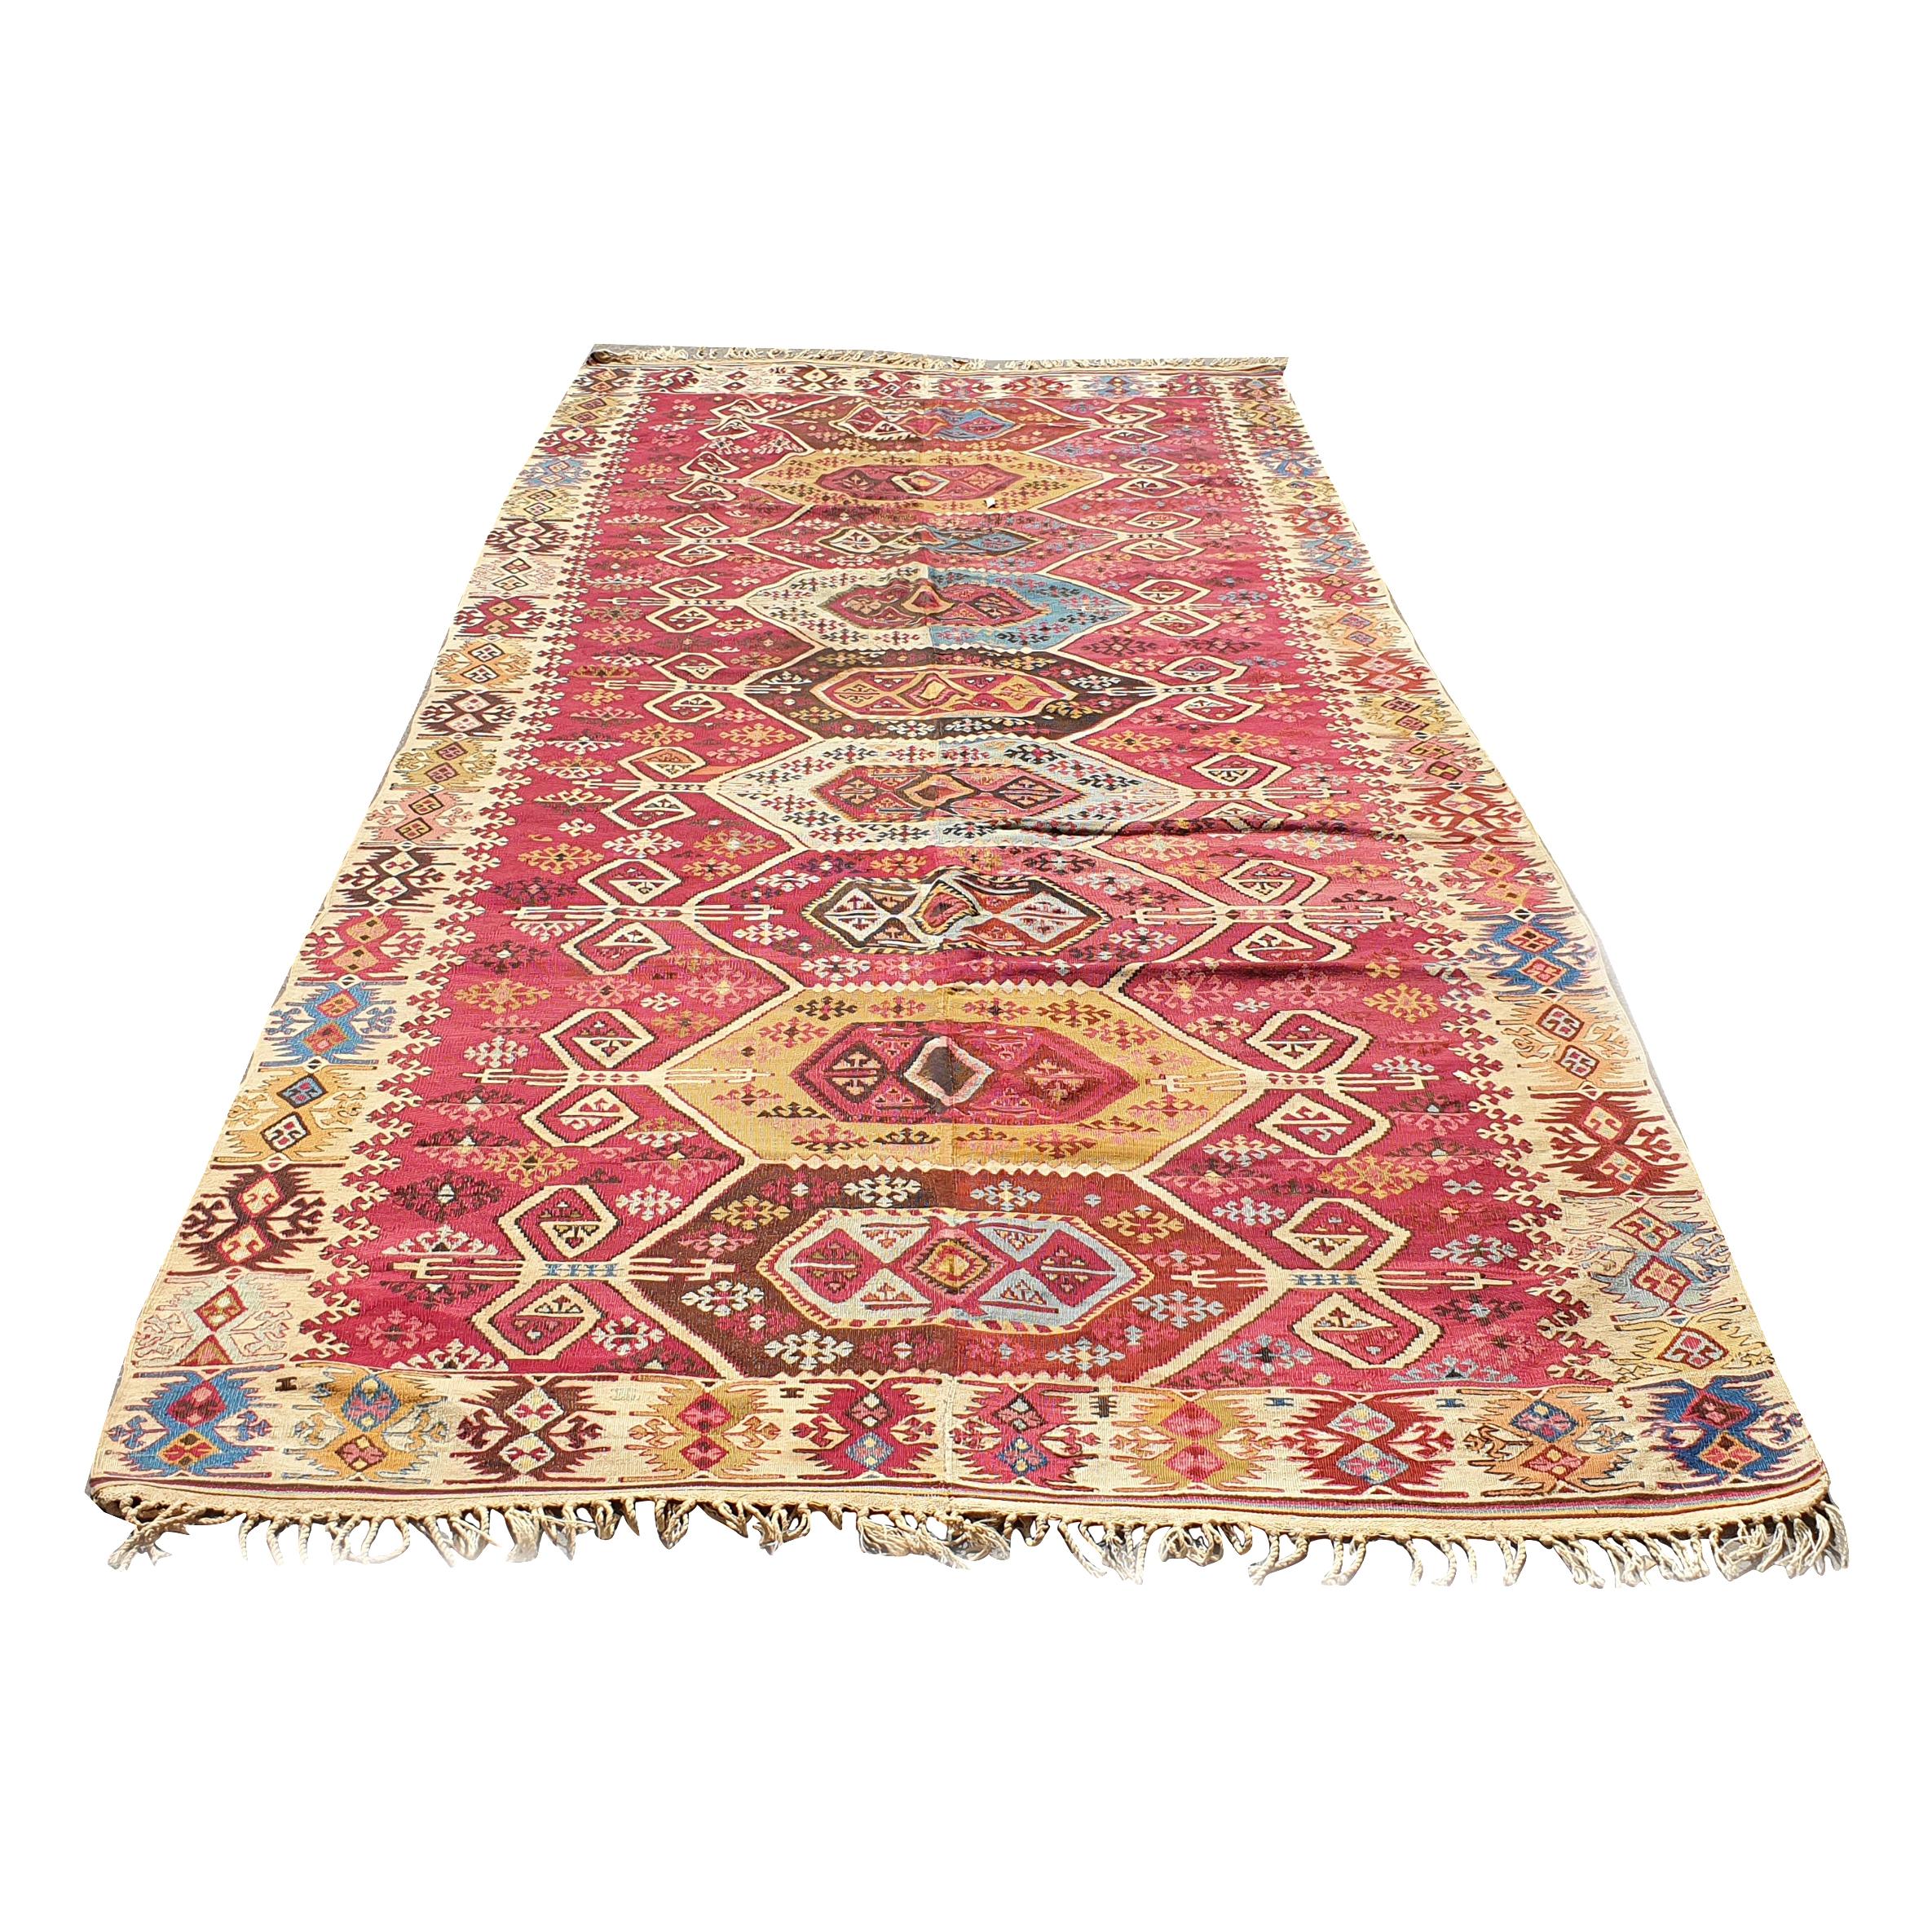 757 - 19th Century Turkish Kilim Carpet For Sale